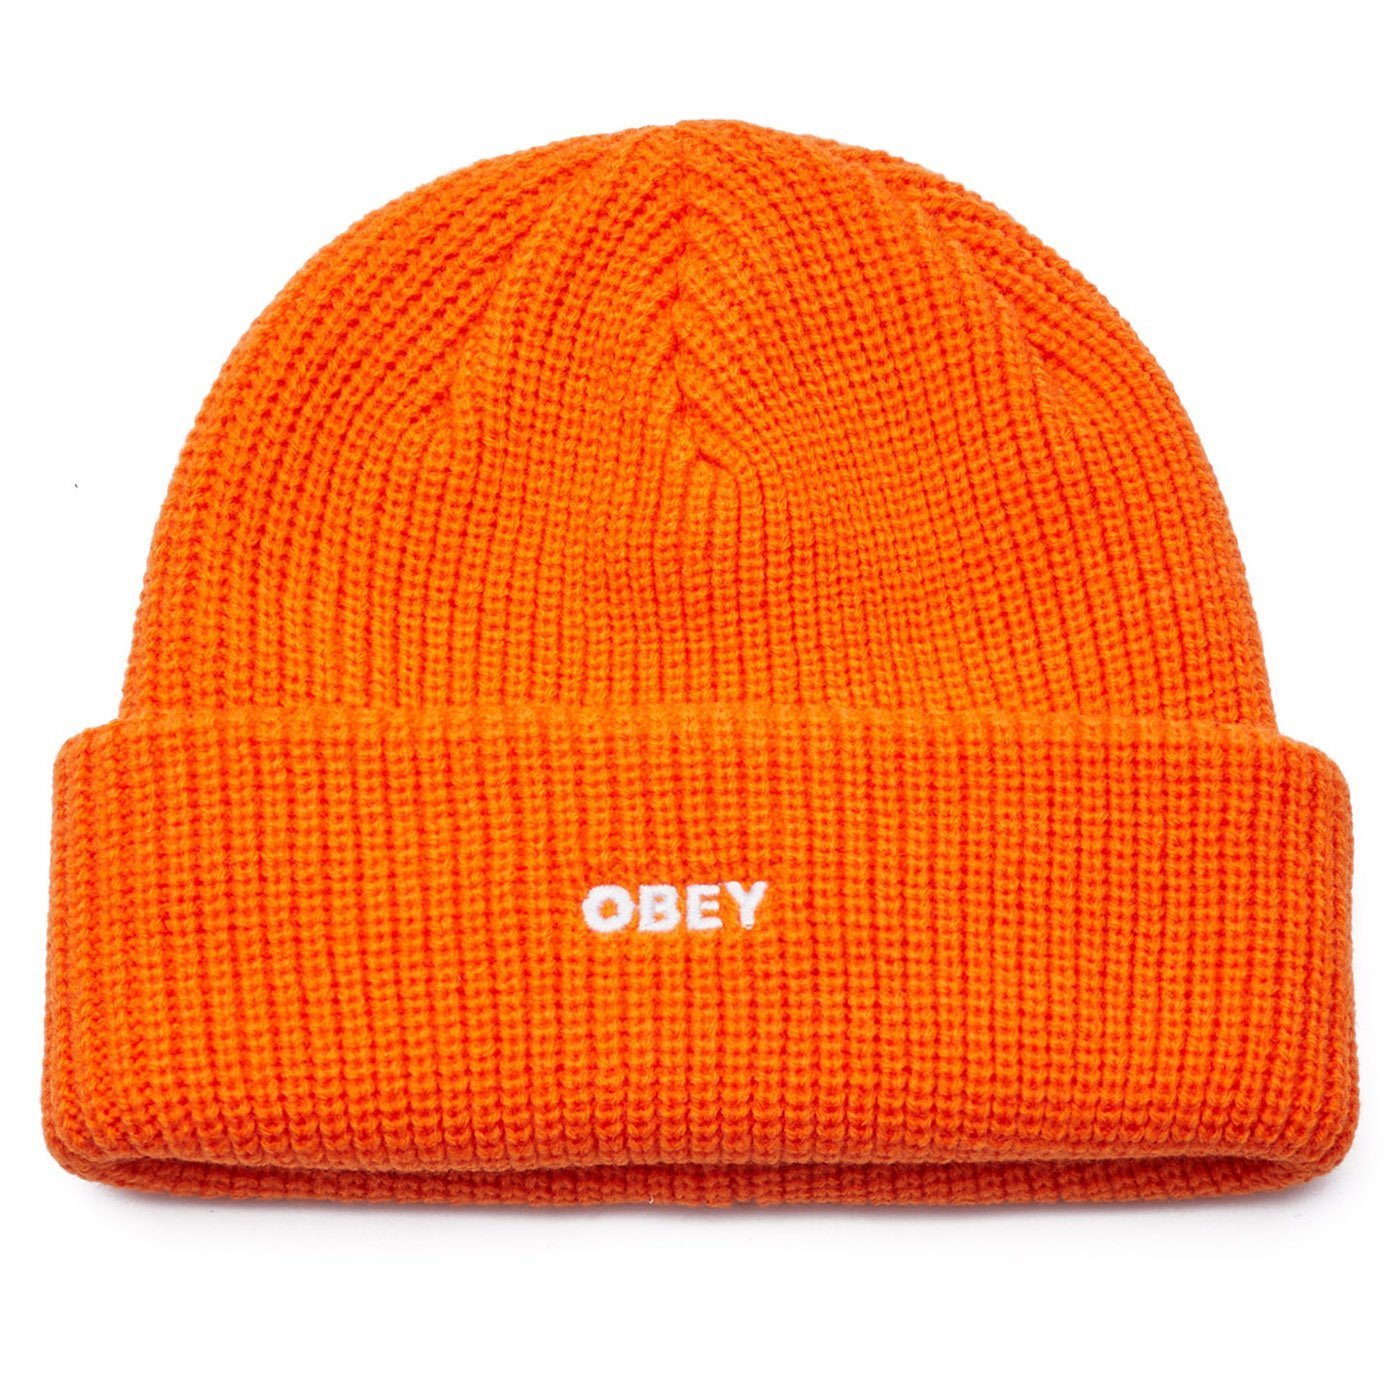 Obey Future Beanie Marmalade (orange) - Legitkicks.ca 